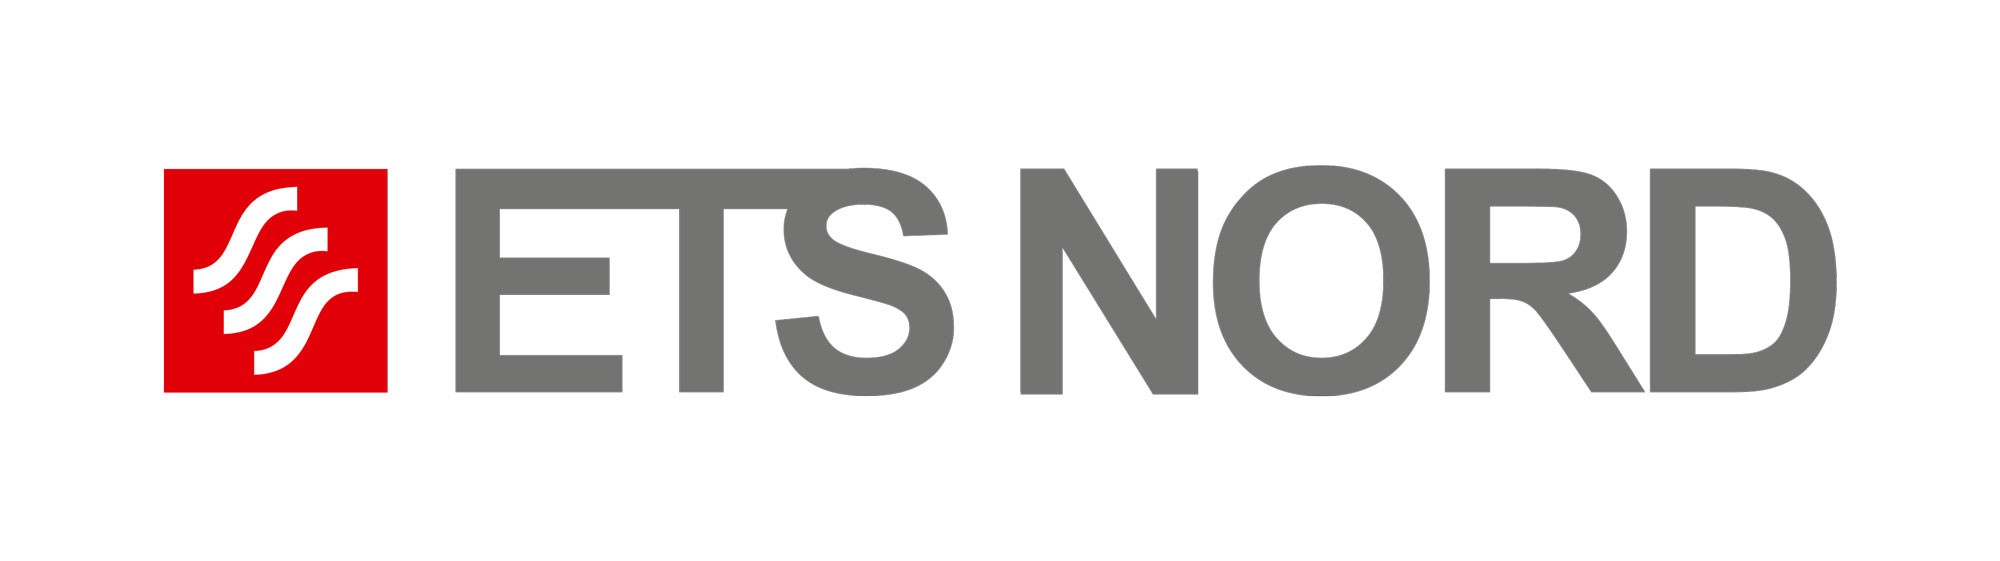 ETS_NORD_logo